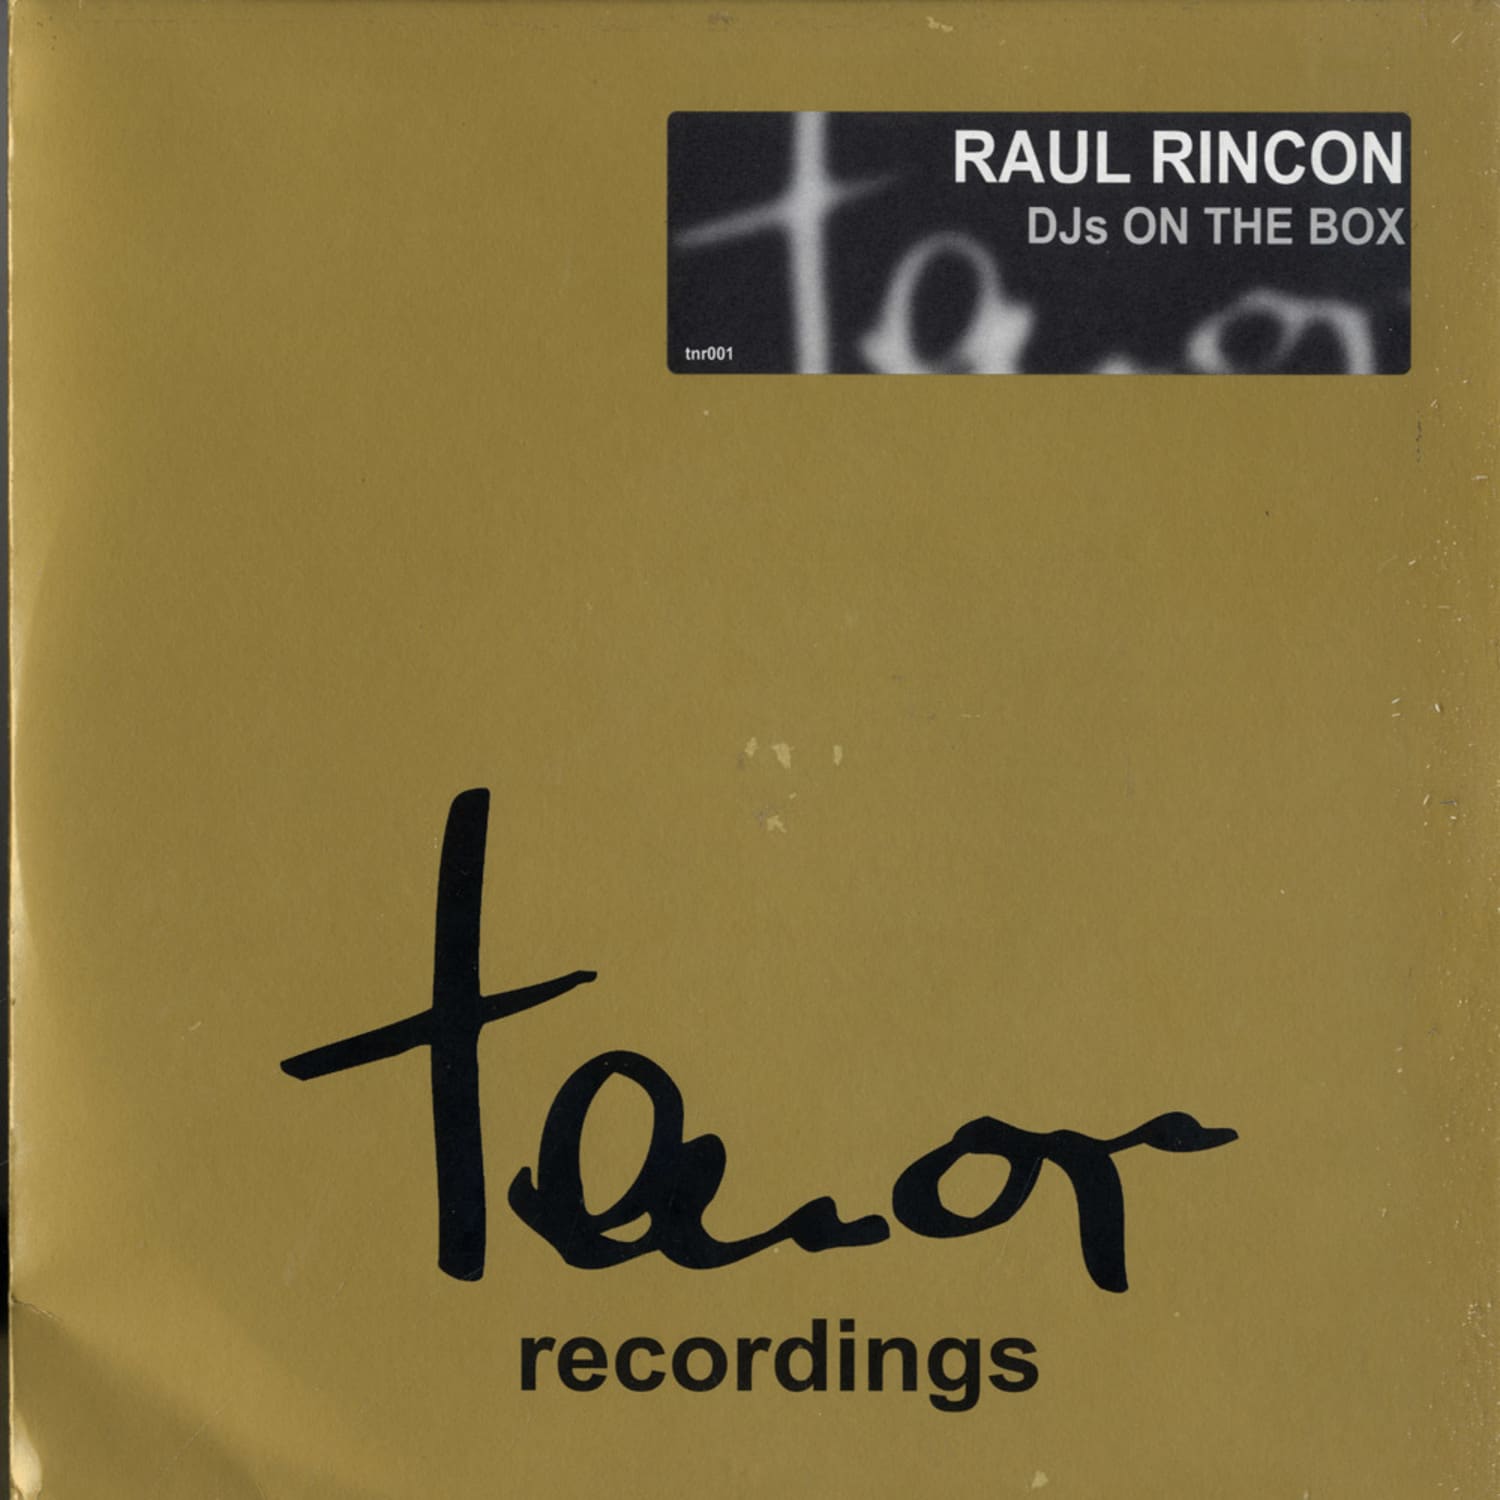 Raul Rincon - DJS ON THE BOX